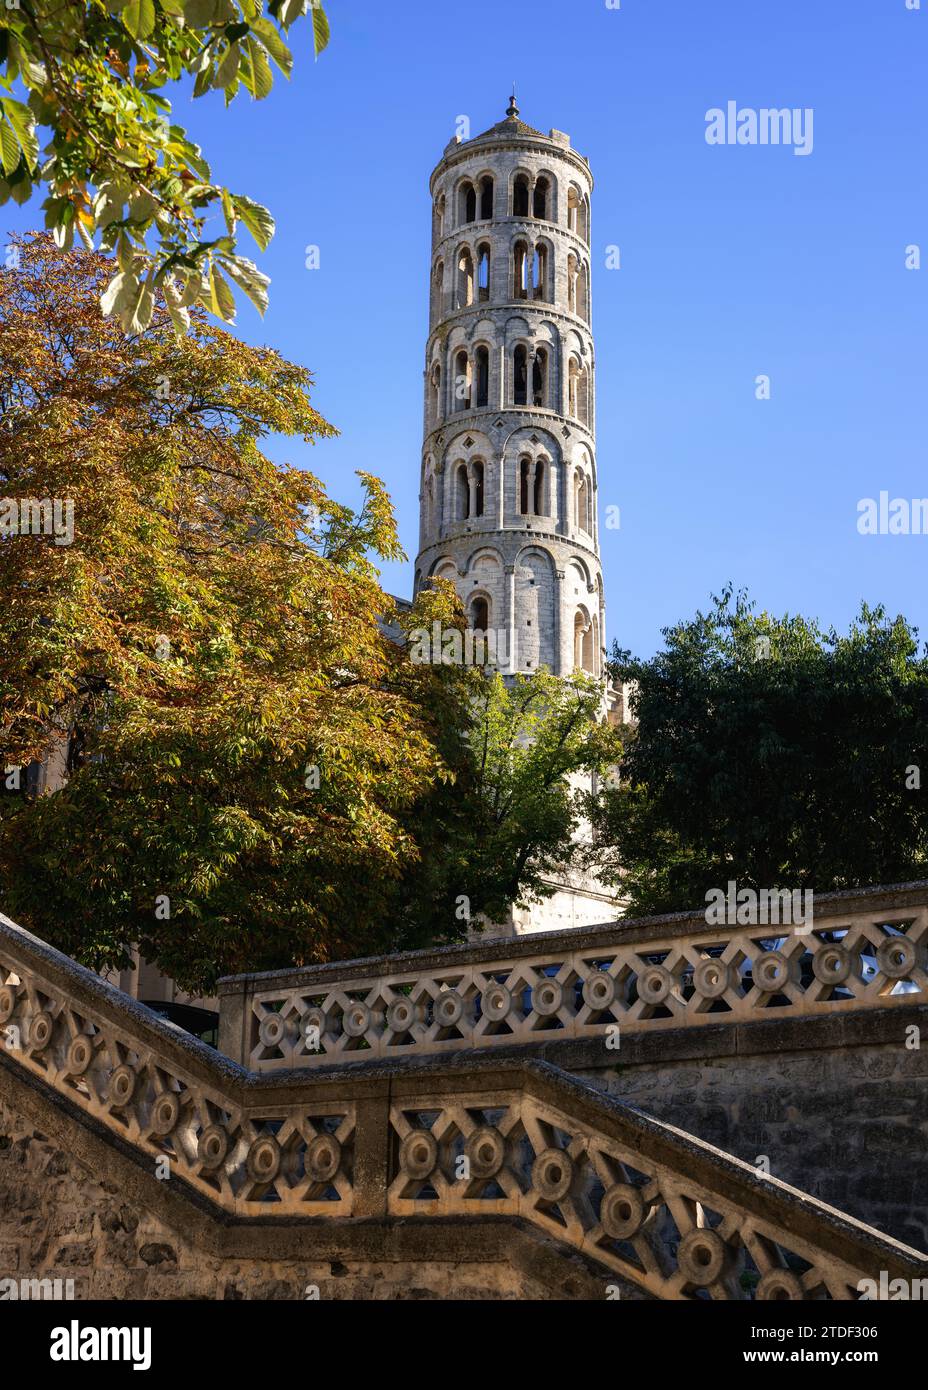 Fenestrelle-Turm, Kathedrale Saint-Theodorit, Uzes, Gard, Frankreich, Europa Stockfoto